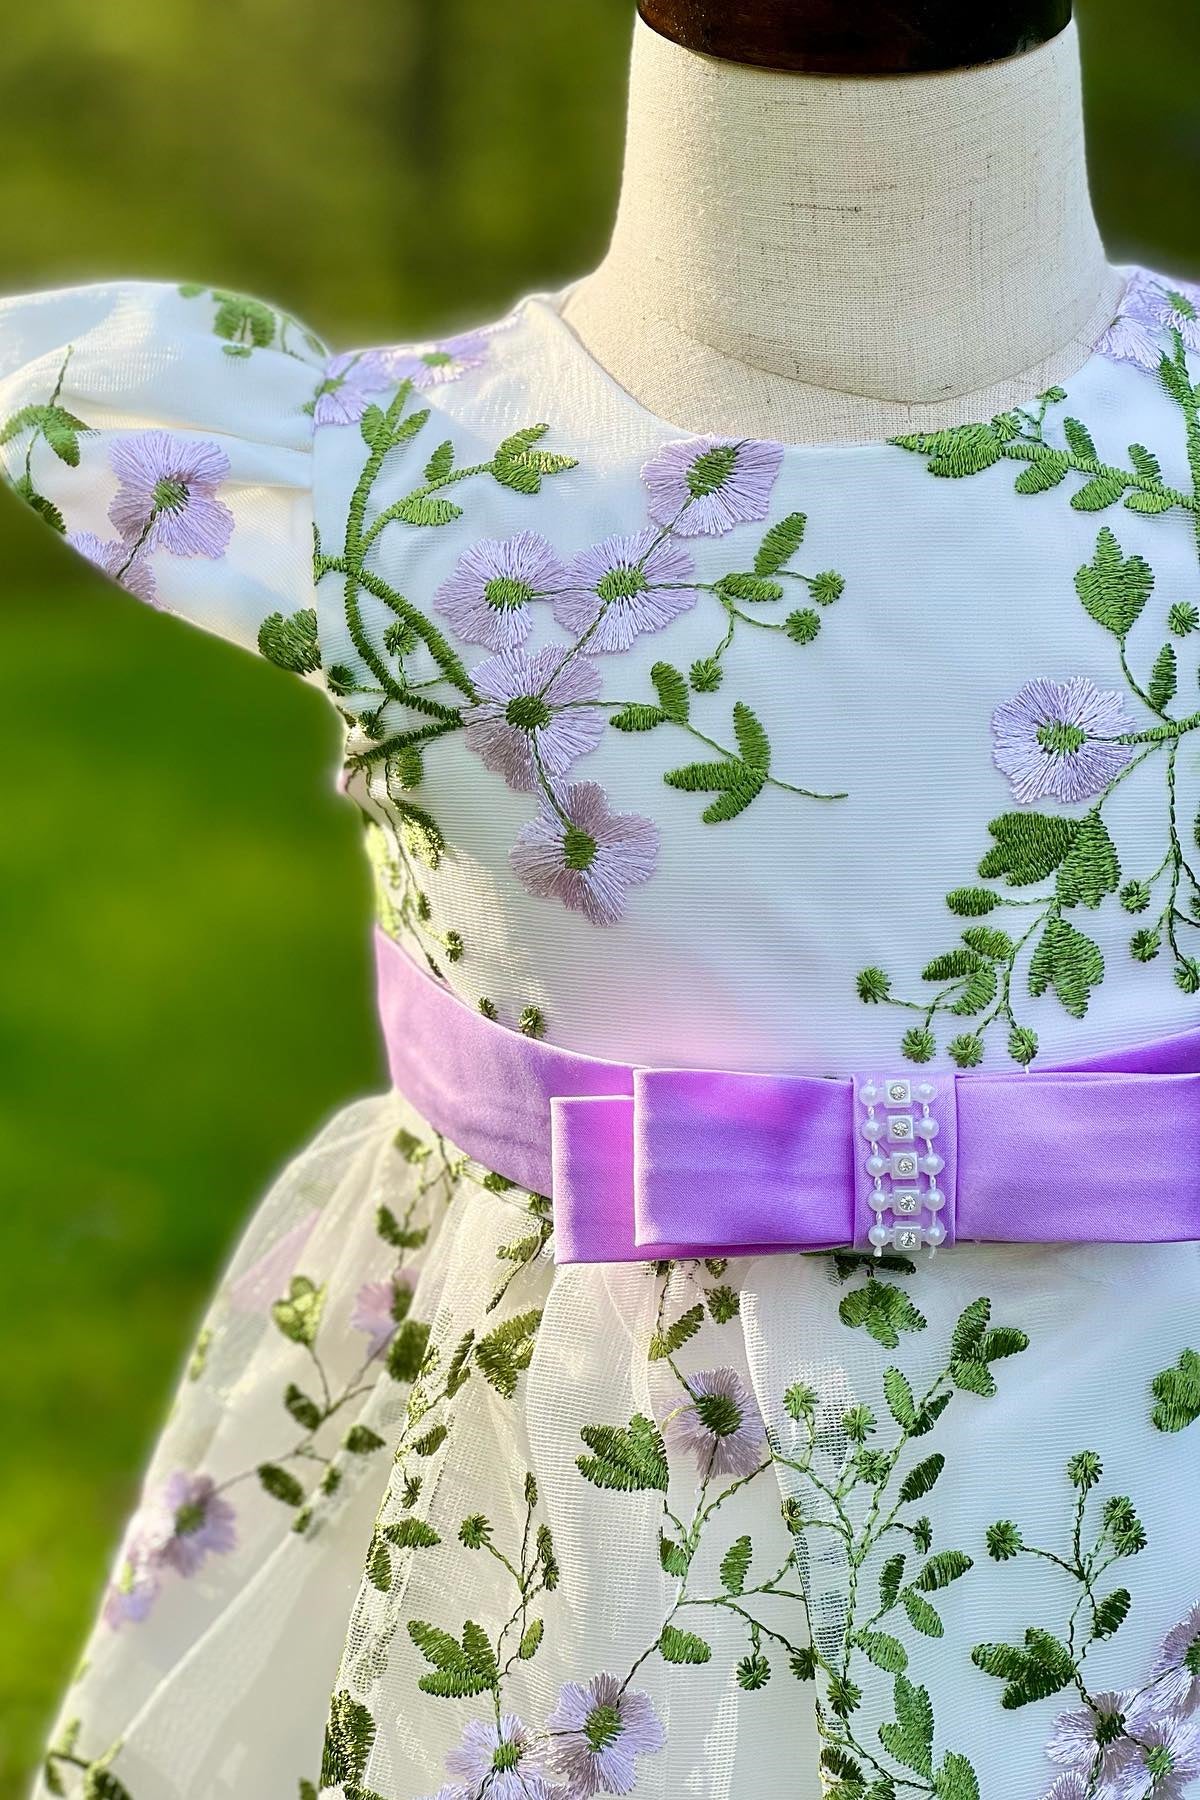 Cute Floral Print Cap Sleeve A-Line Girl Party Dress